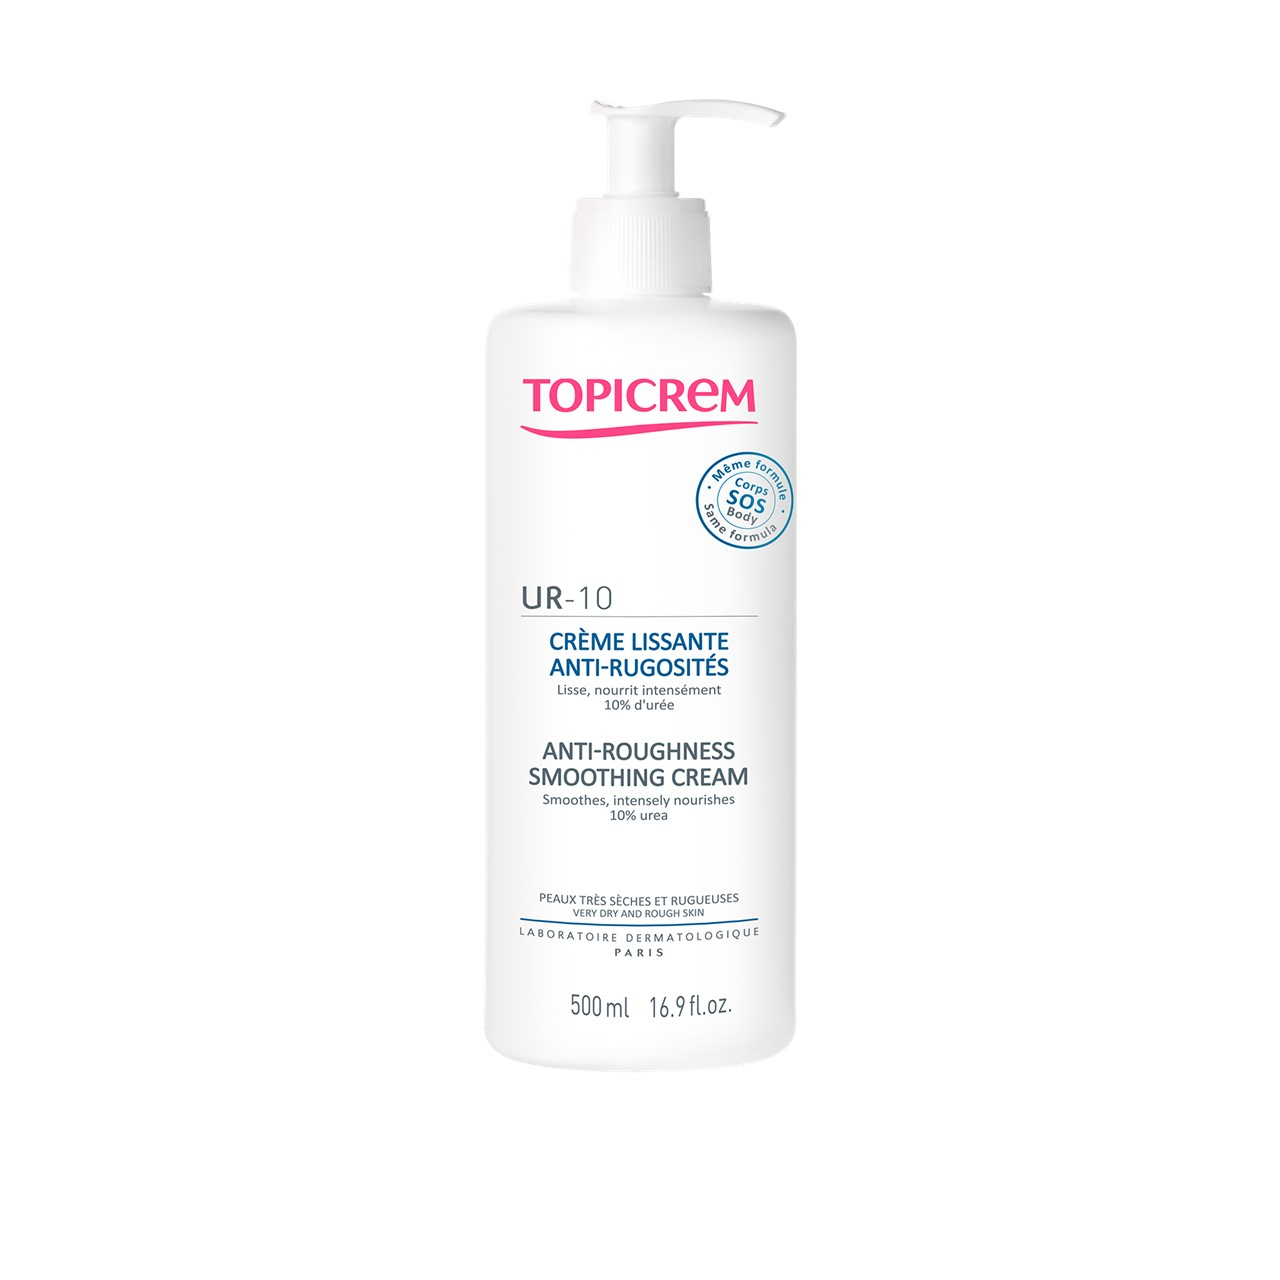 Topicrem UR-10 Anti-Roughness Smoothing Cream 500ml (16.91fl oz)